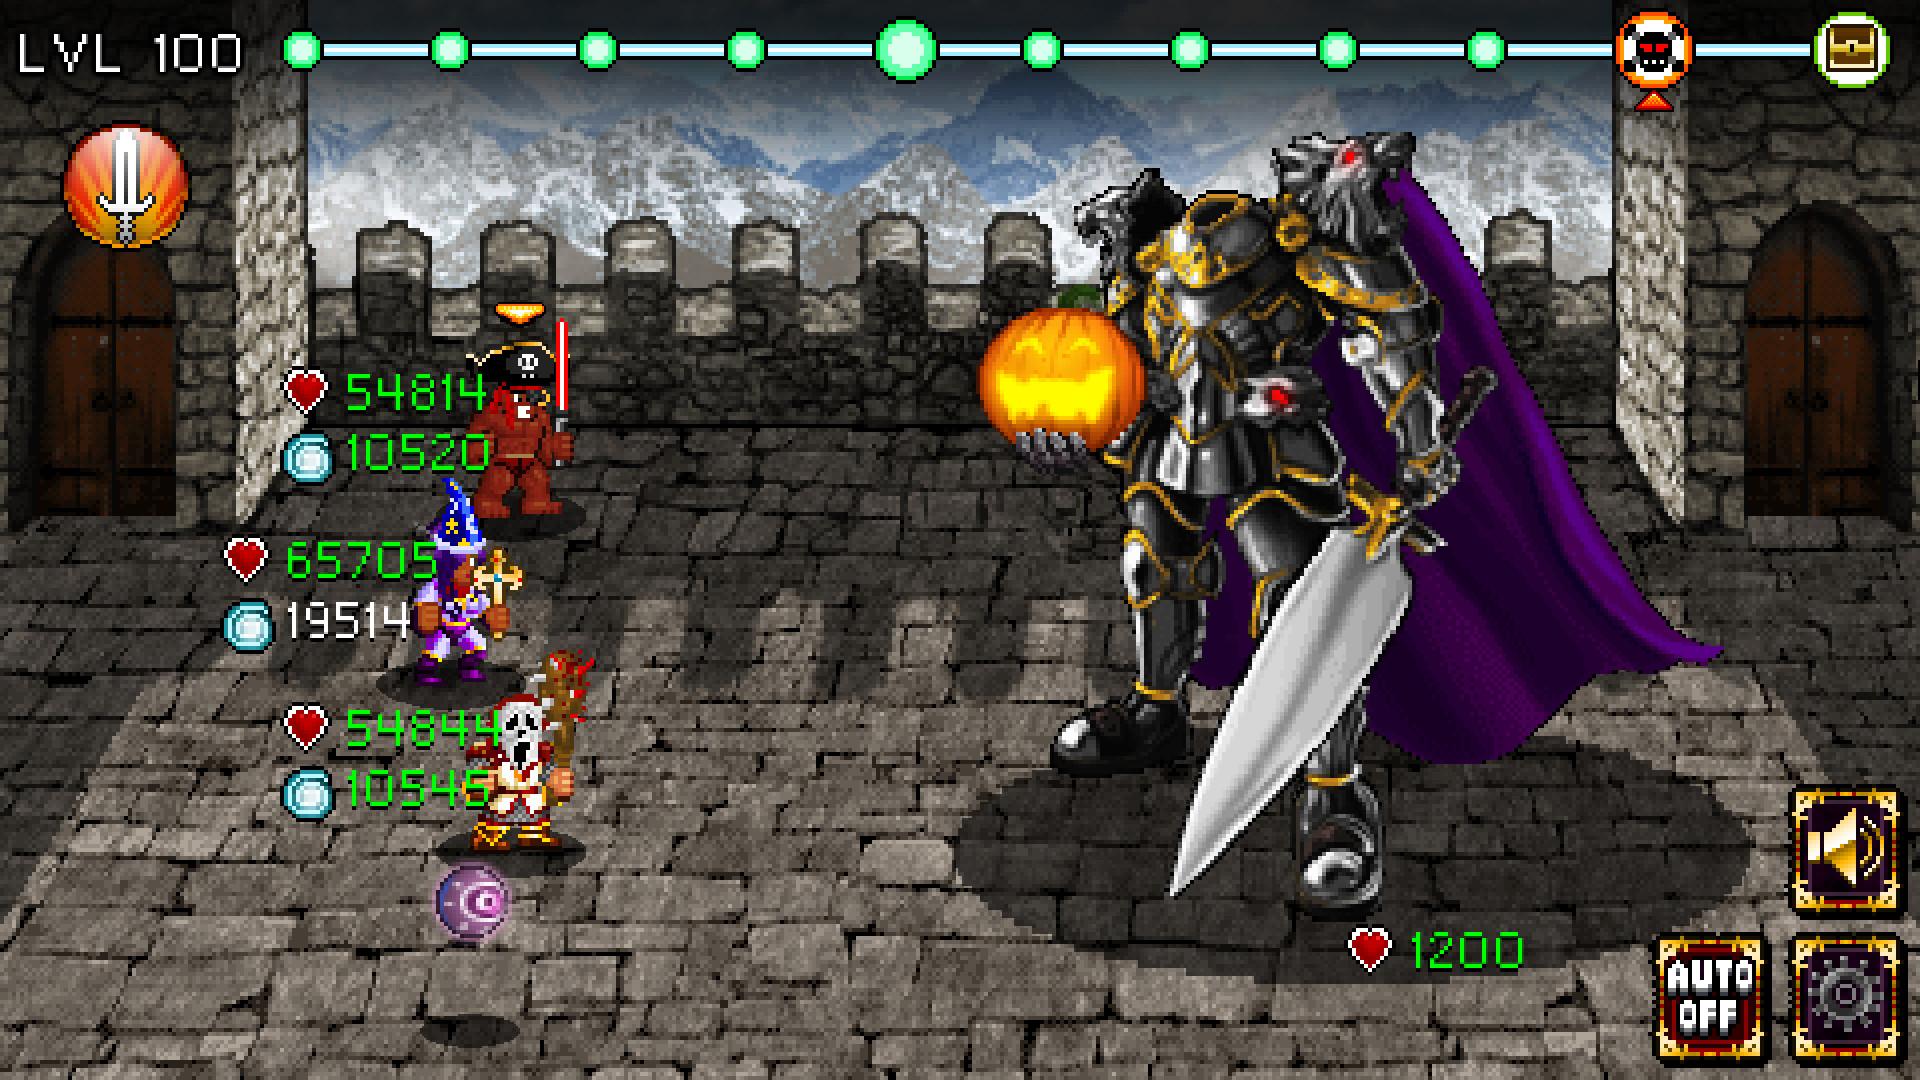 Screenshot №2 from game Soda Dungeon